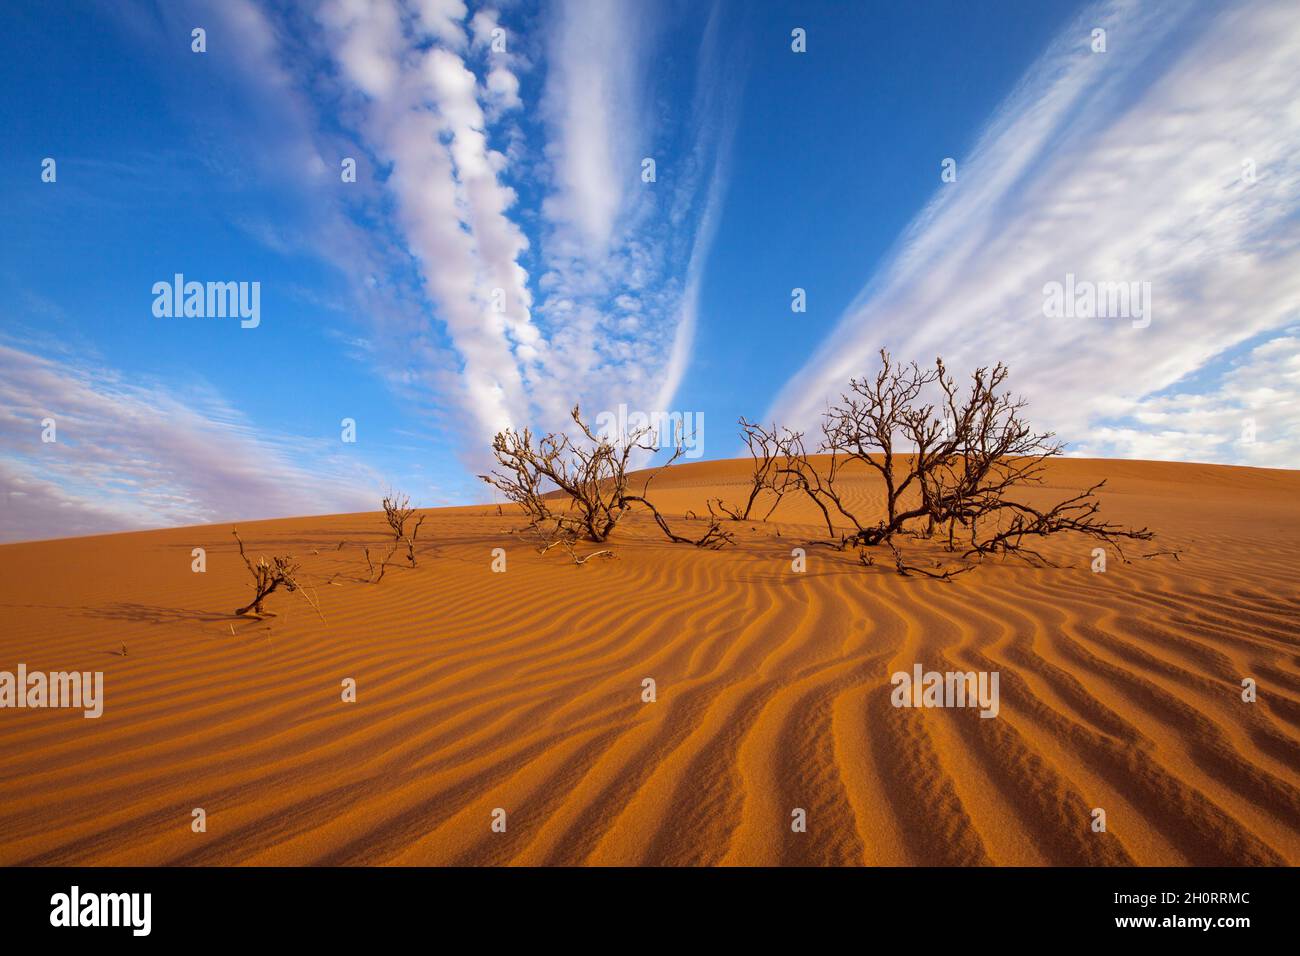 Dead trees in the desert, Saudi Arabia Stock Photo